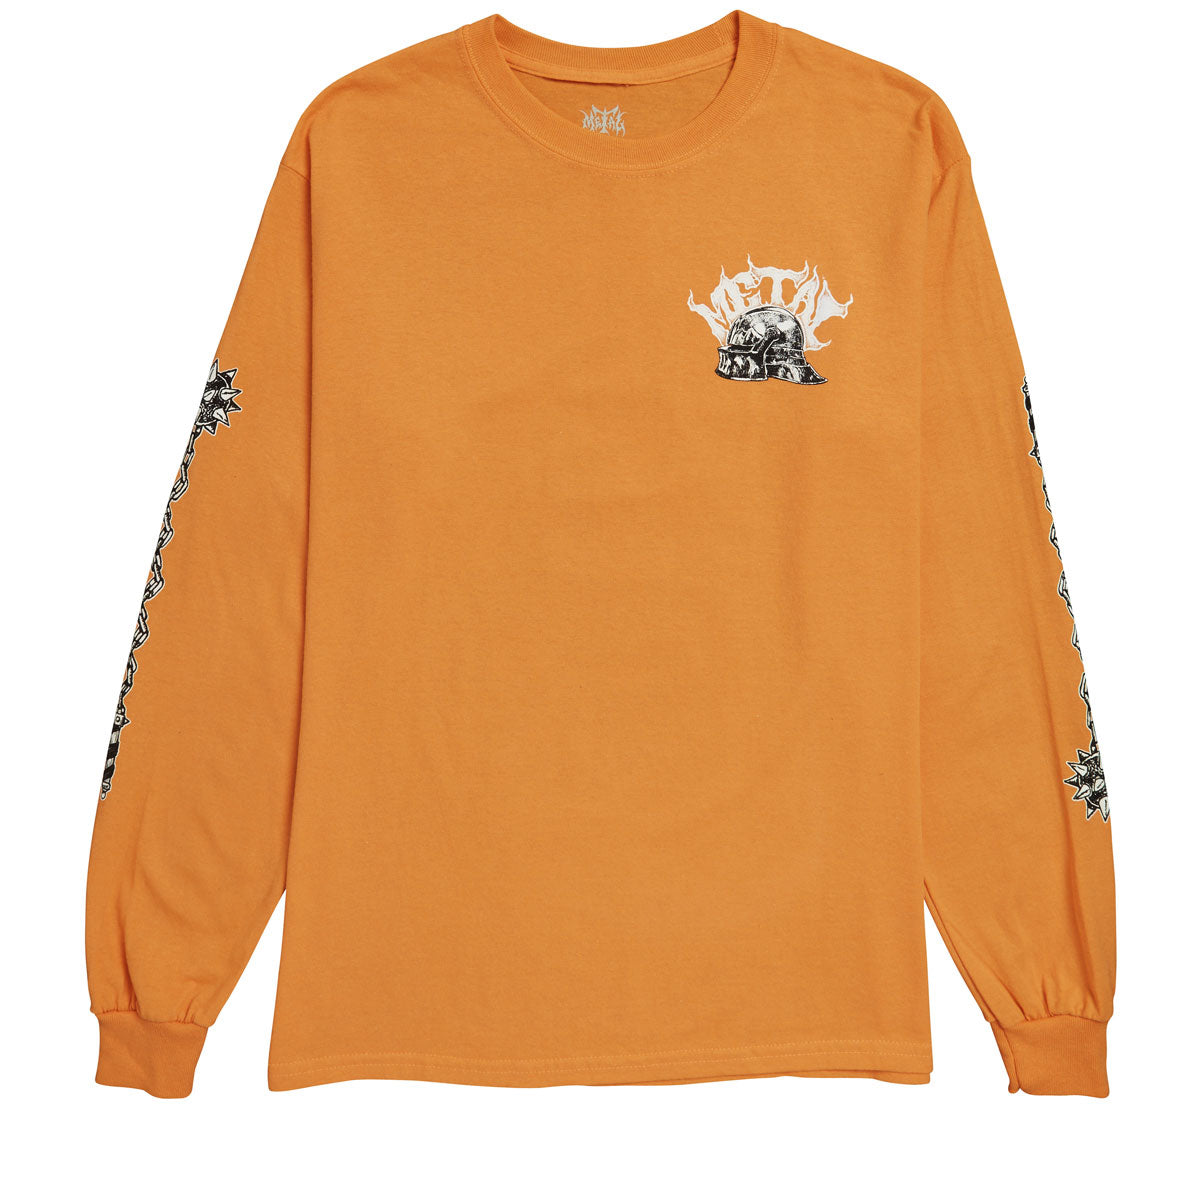 Metal Chain Flail Long Sleeve Shirt - Safety Orange image 2